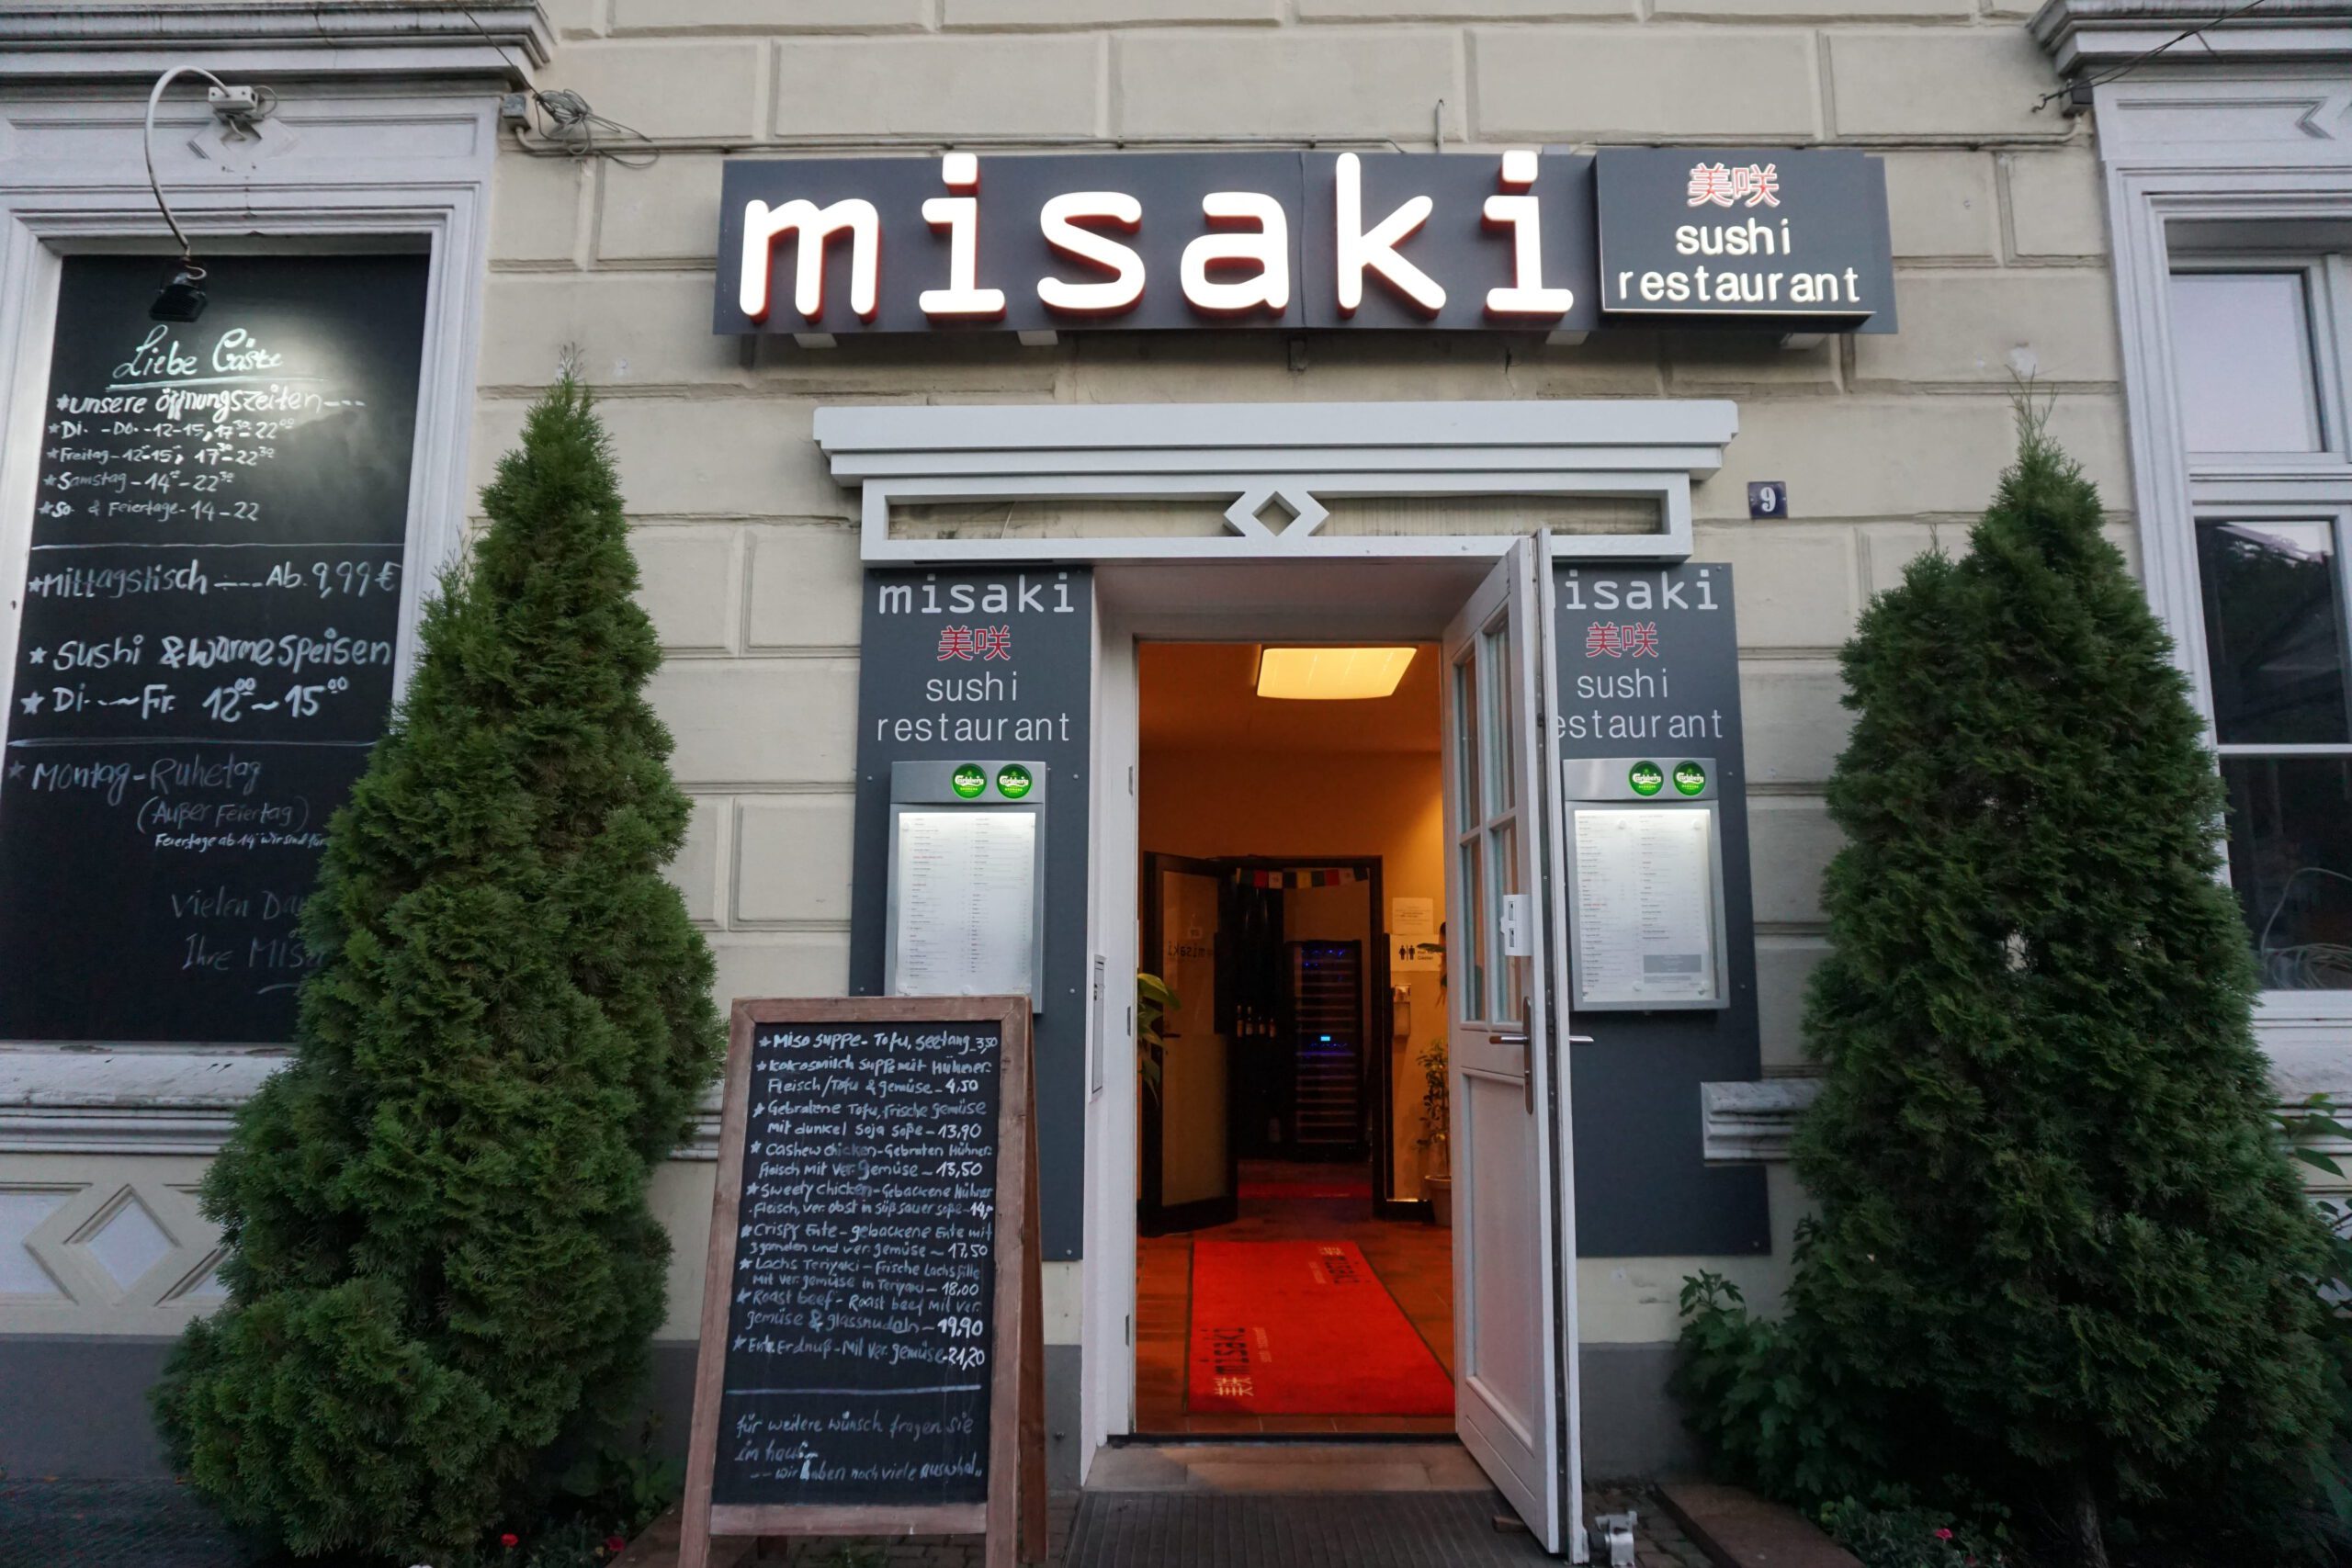 misaki sushi ahrensburg eingang